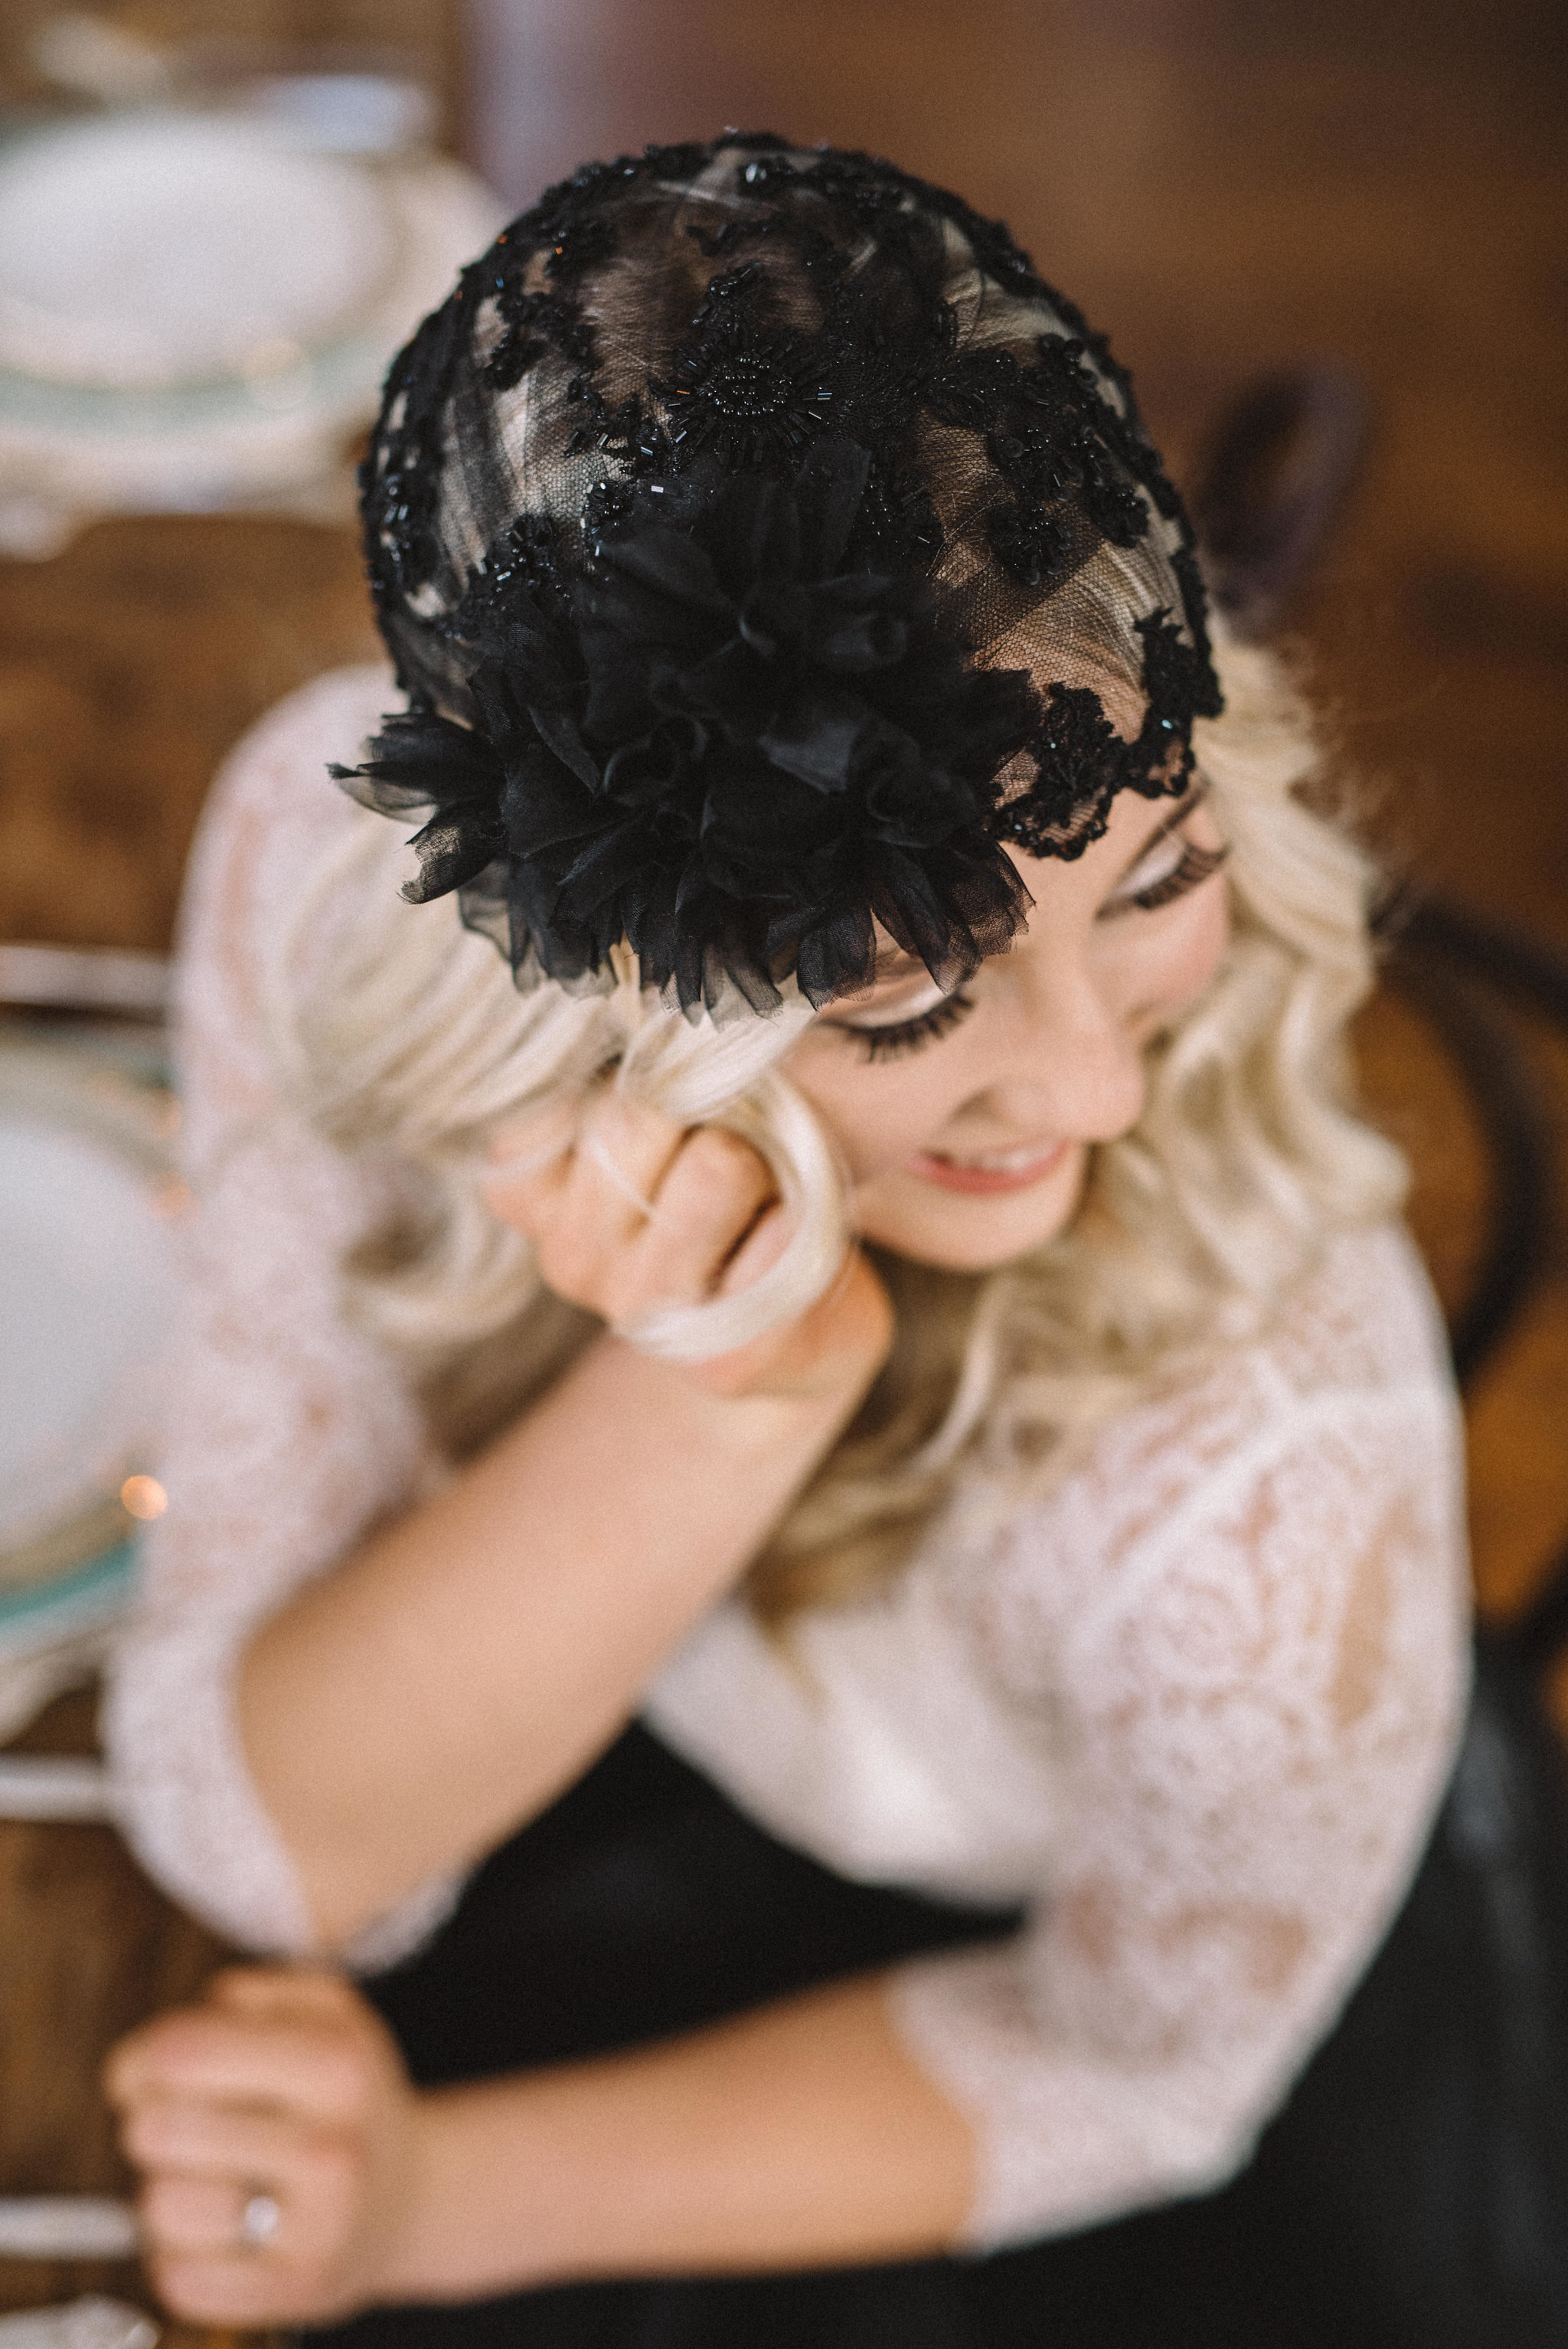 Black Wedding Dress | Olive Photography Toronto